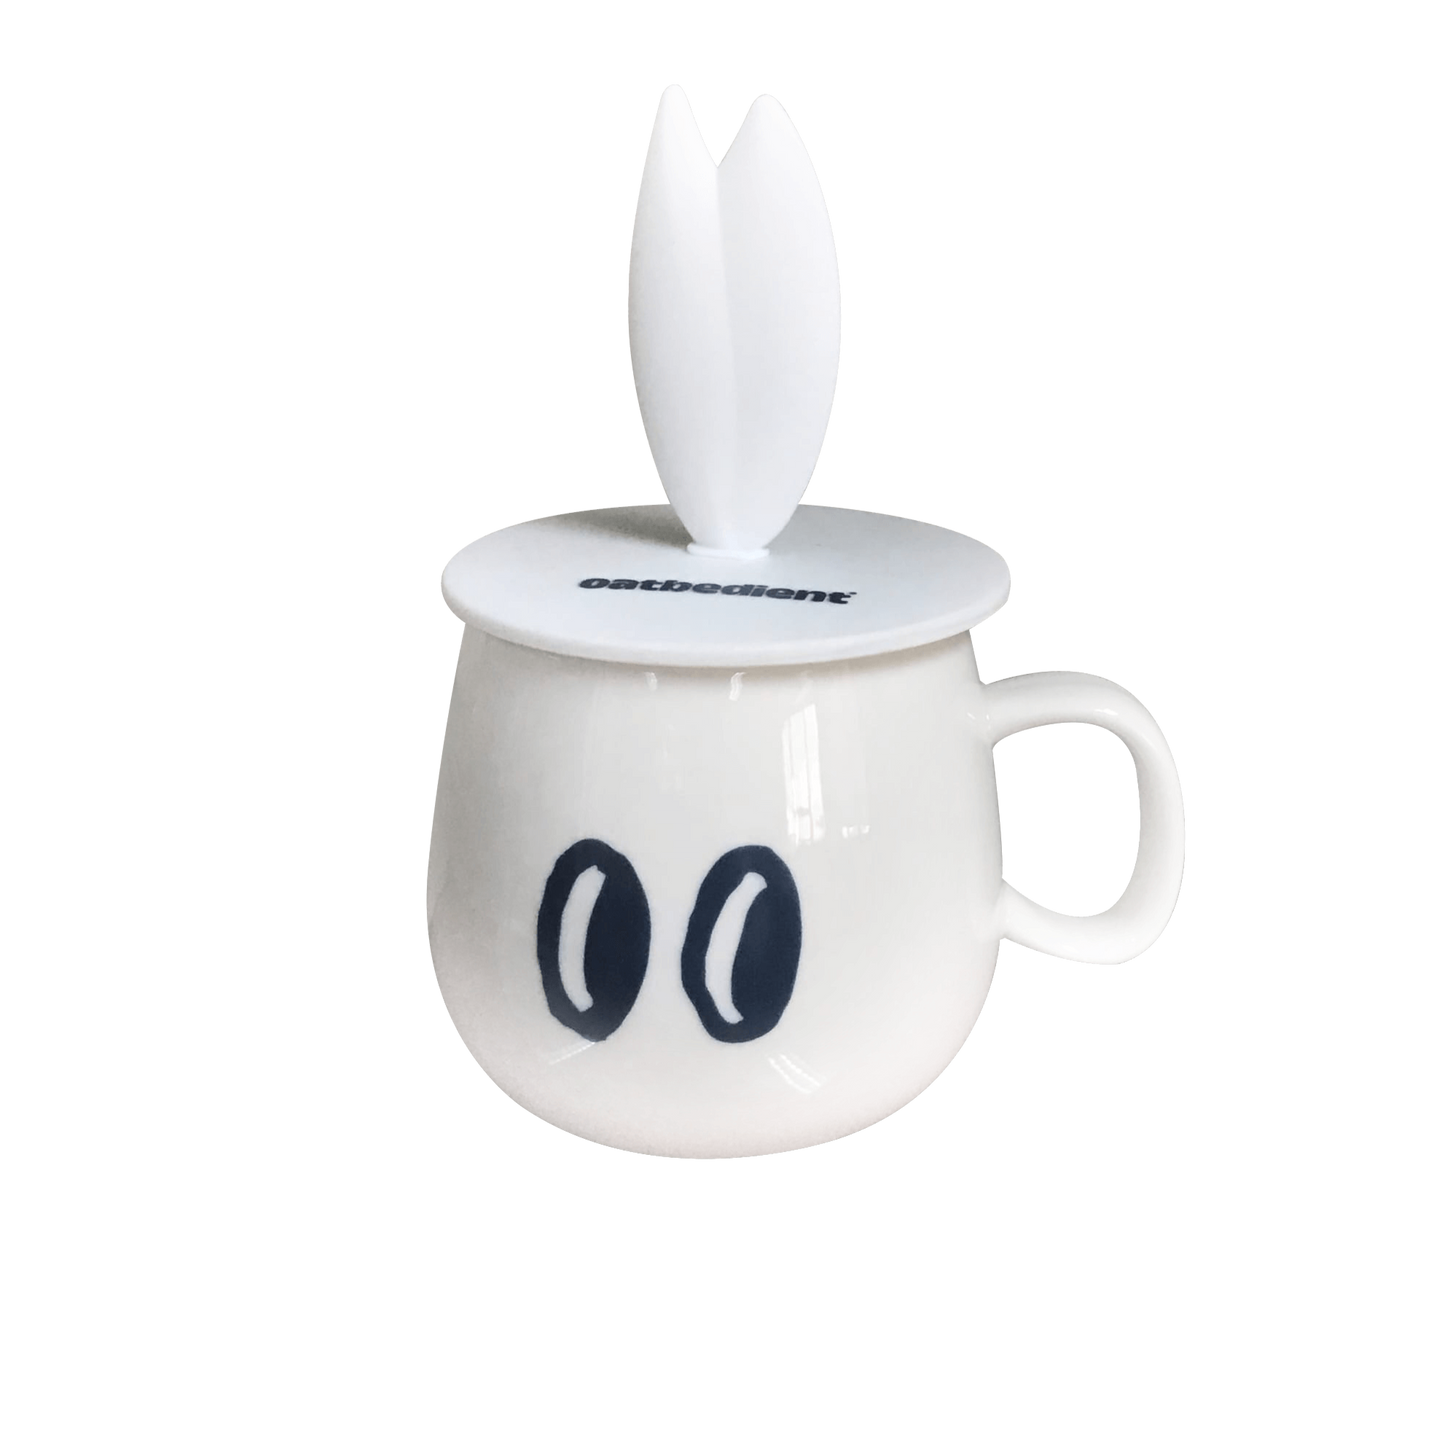 Oatdit Ceramic Mug perfectfor enjoying oat milk benefits